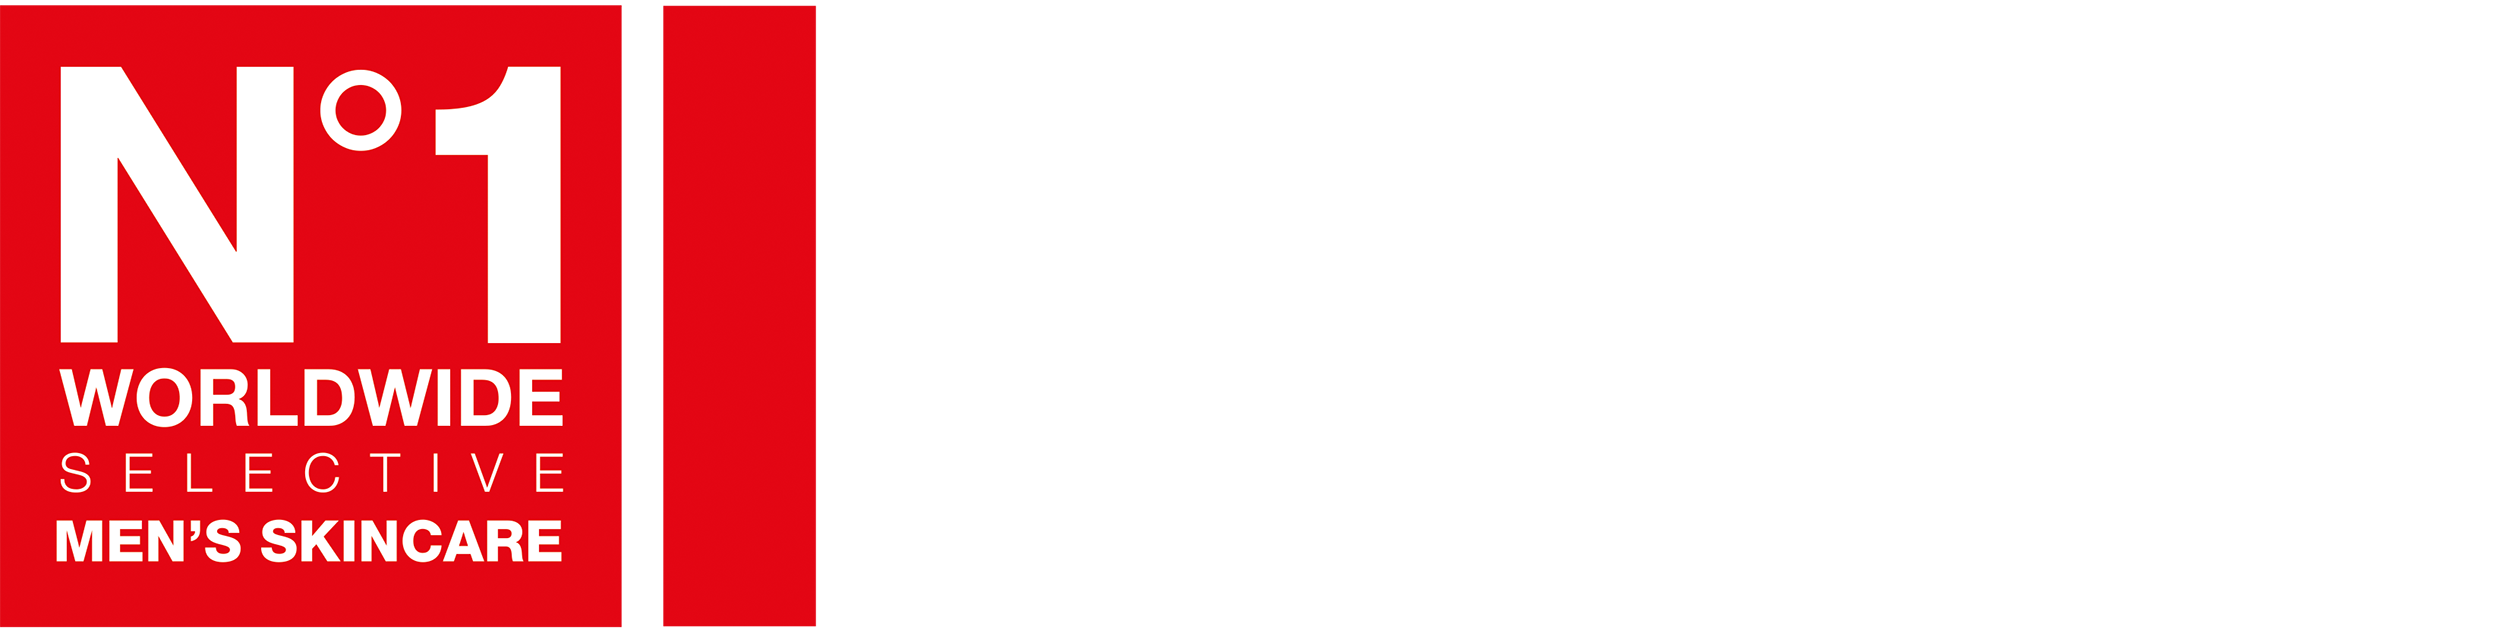 Biotherm Homme Logo